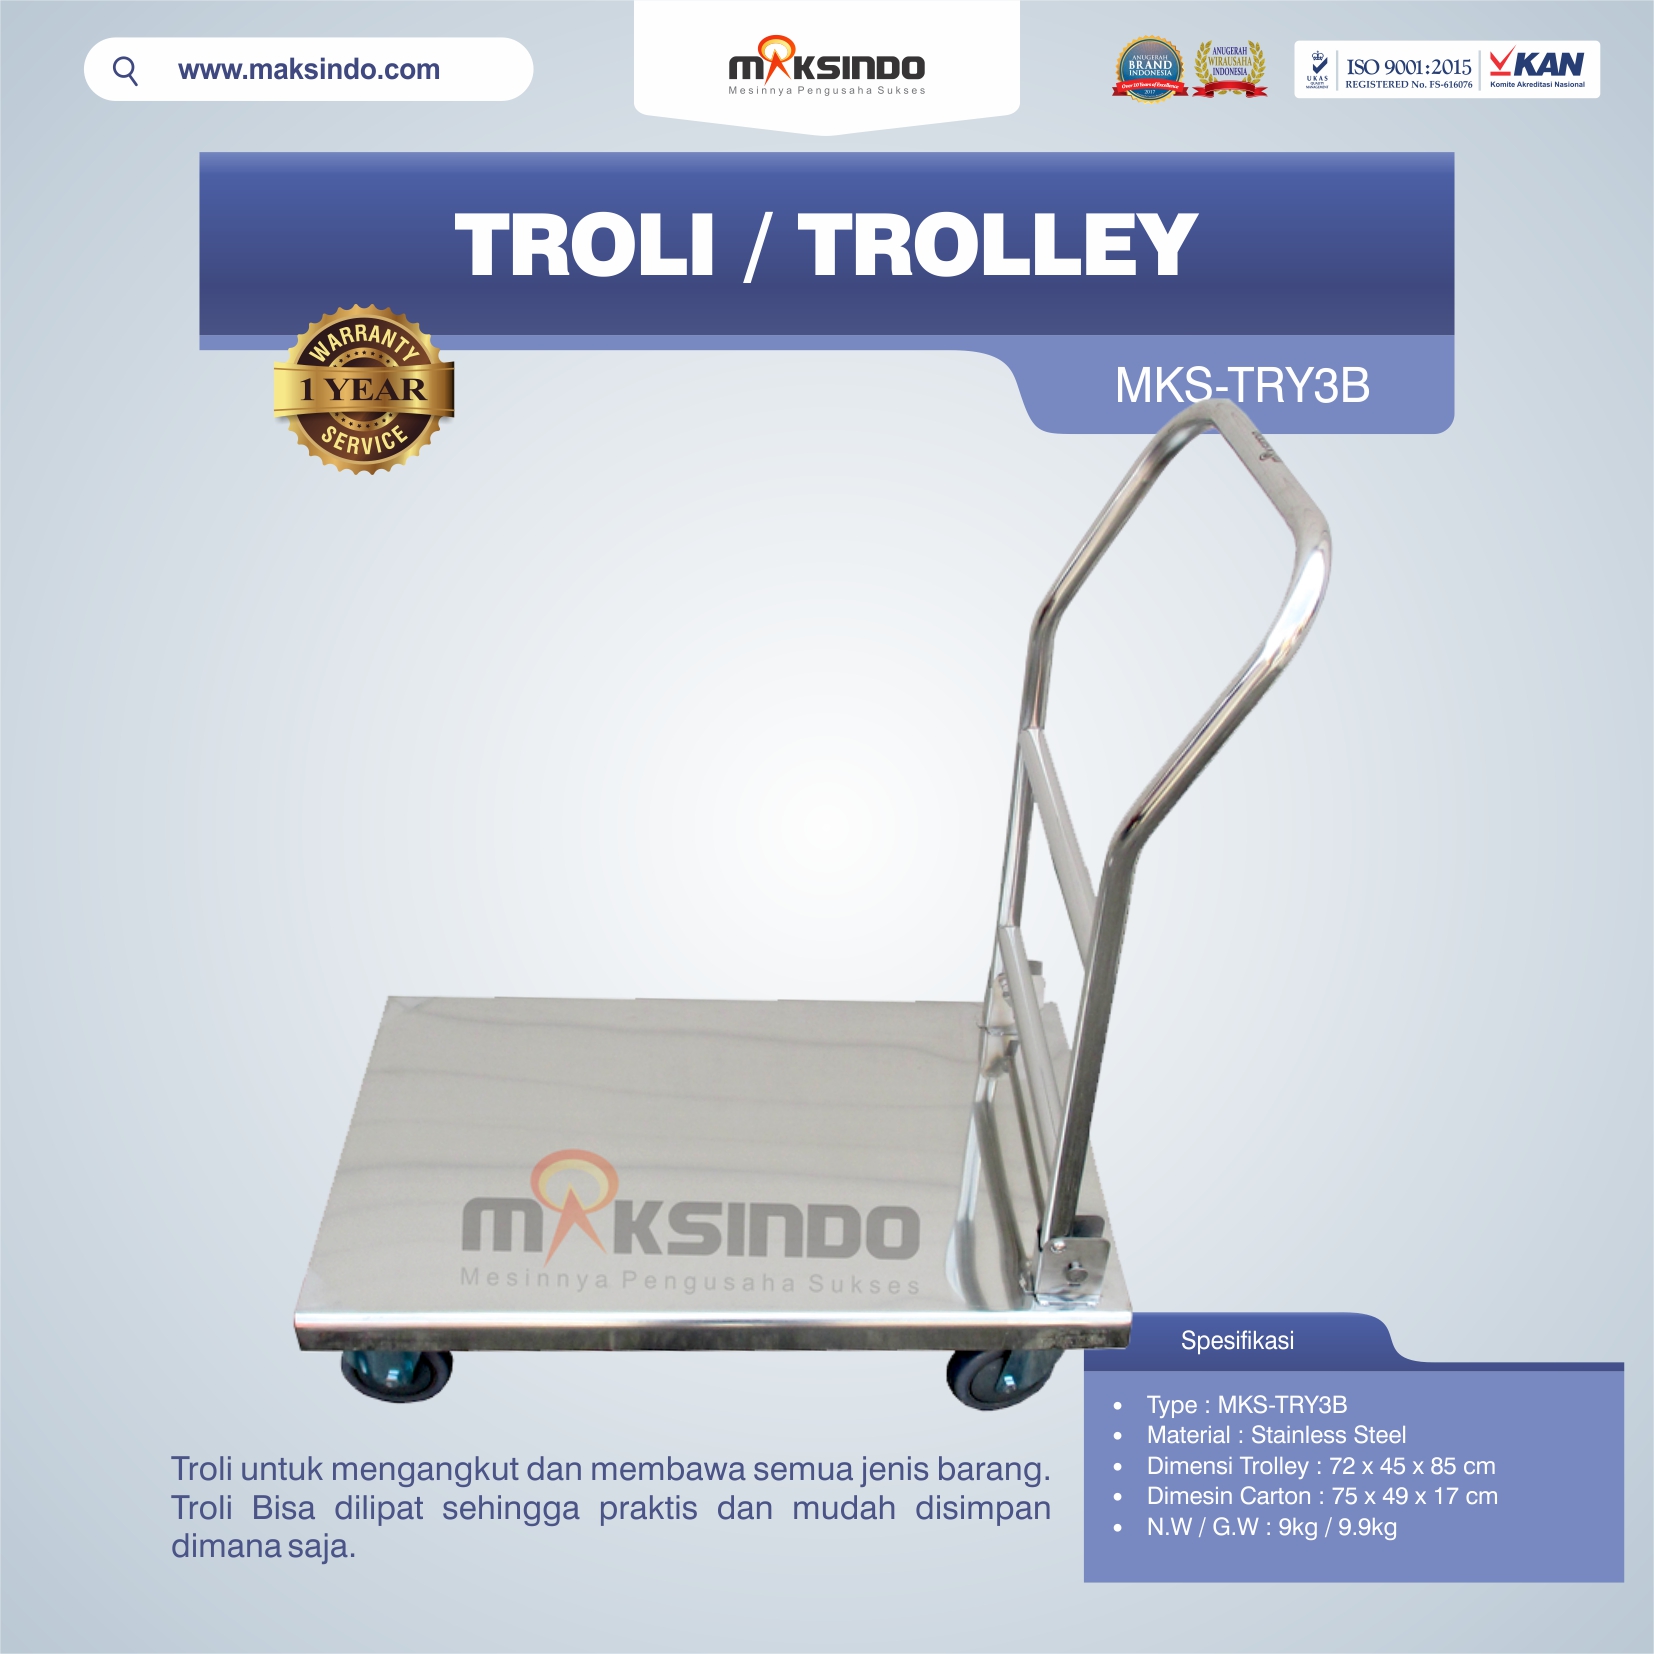 Jual Troli/Trolley MKS-TRY3B di Banjarmasin